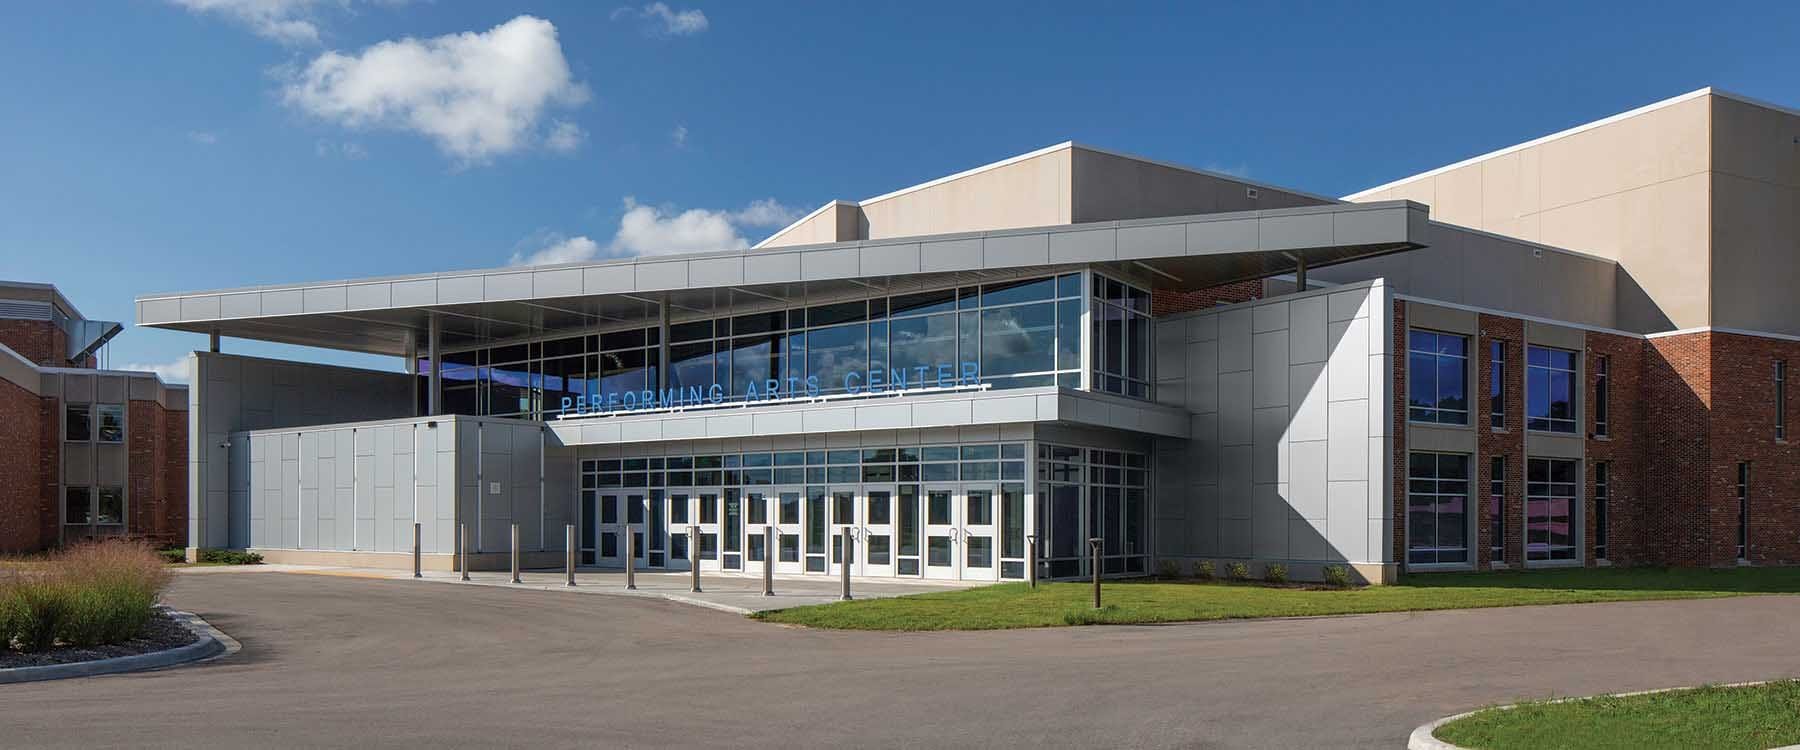 Germantown School District High School Performing Arts Center Entrance